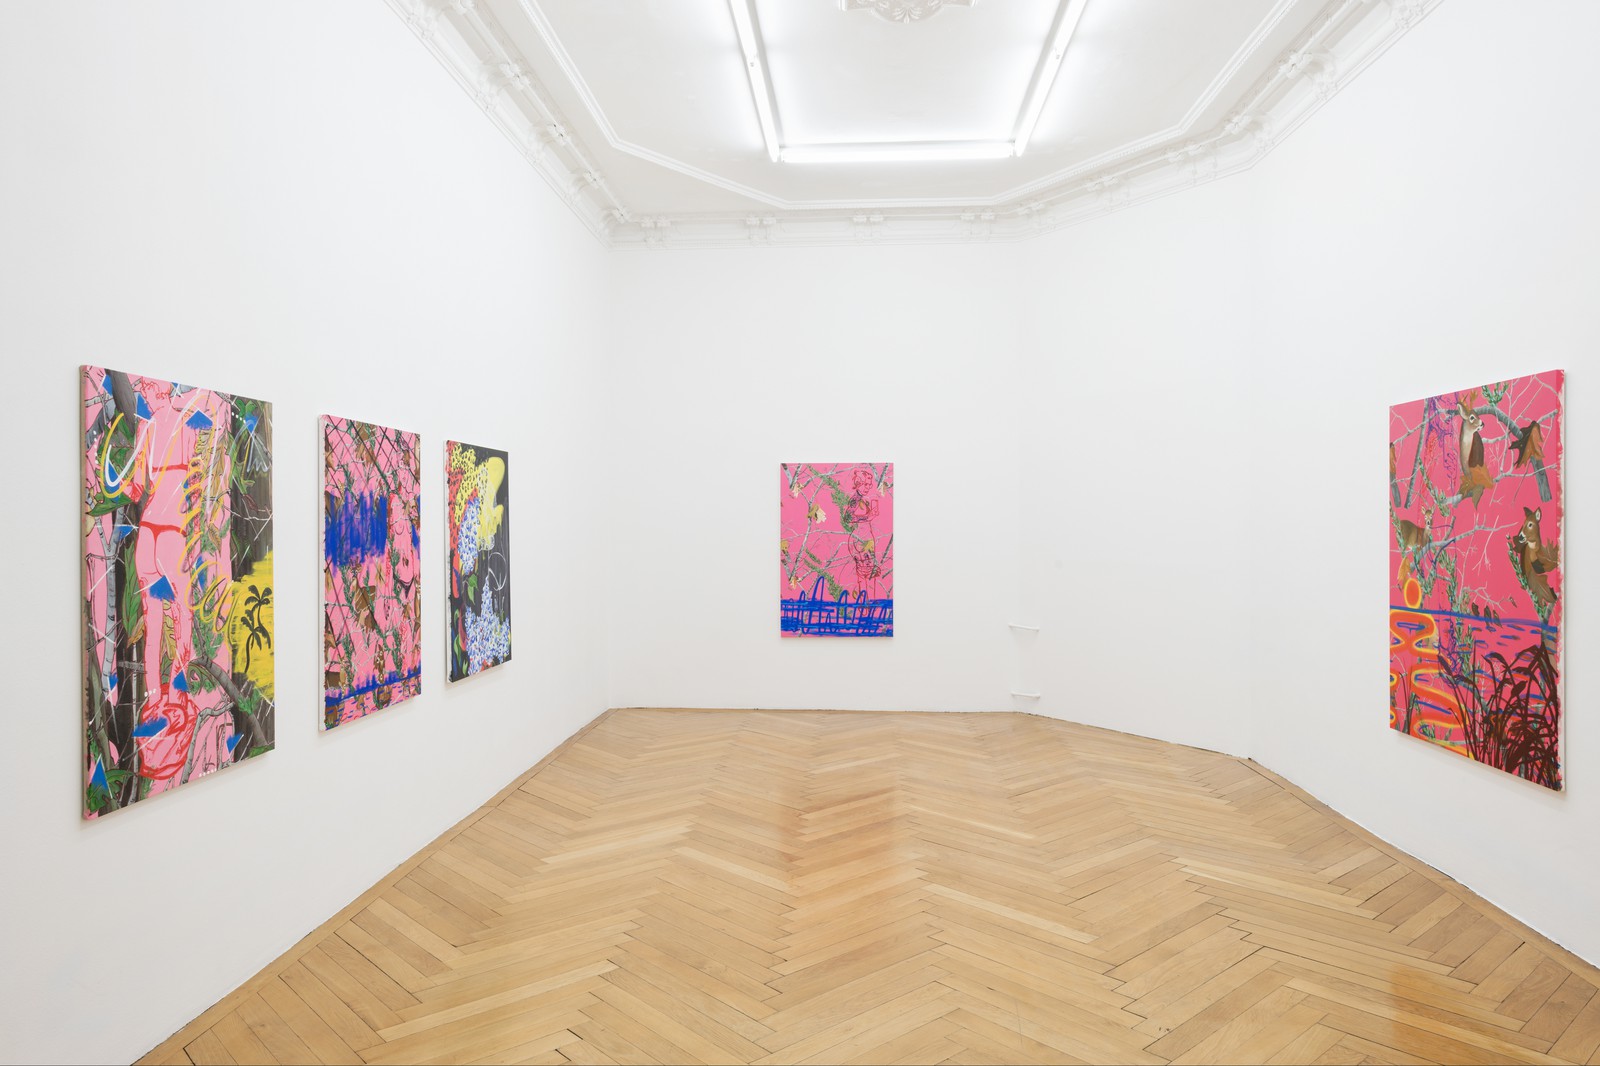 Installation view, Lana del Rey, Société, Berlin, 2018